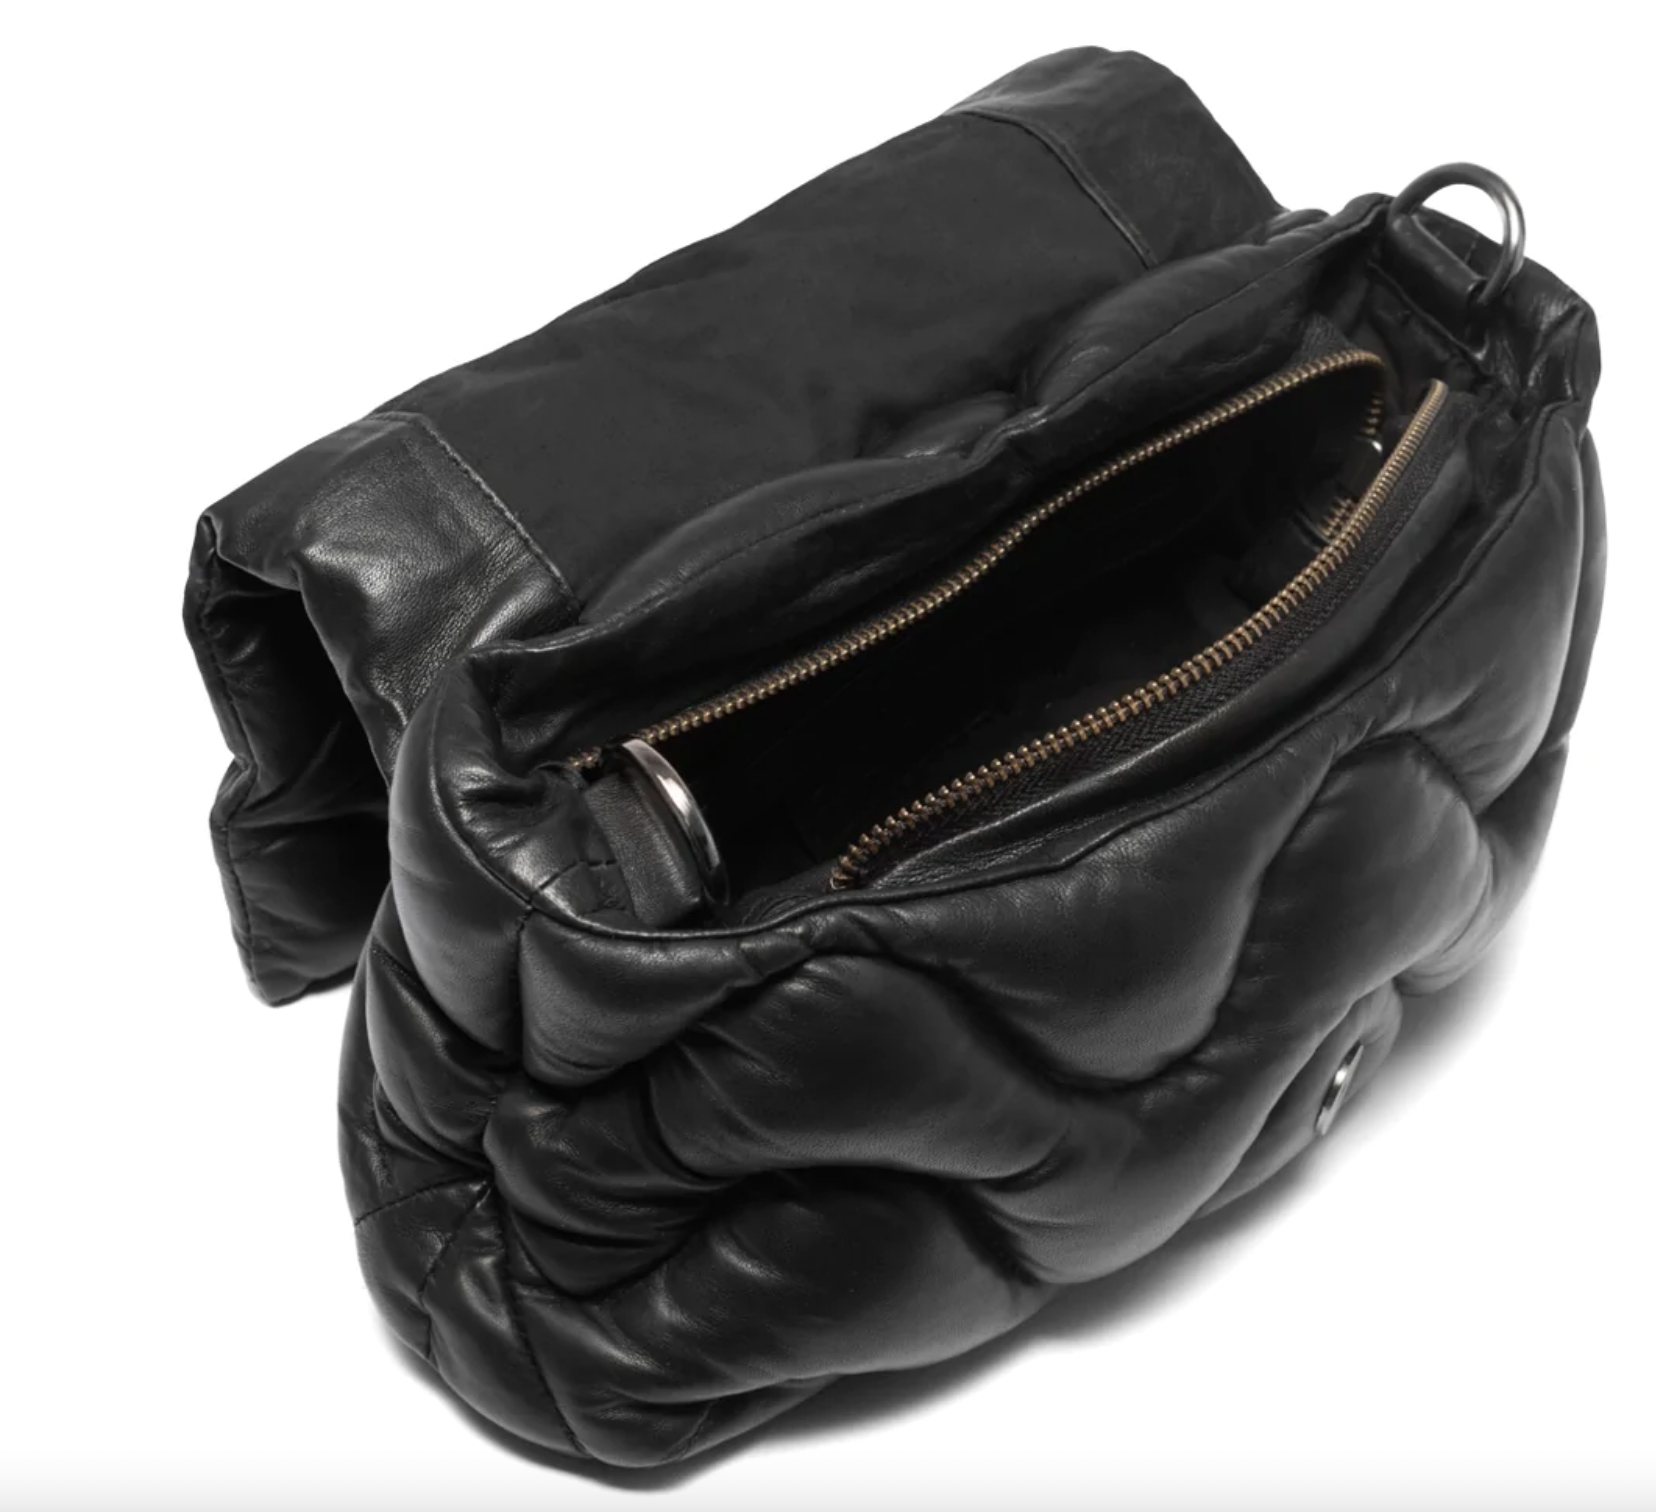 Higher Quality, Durable DEPECHE Small bag BLACK 